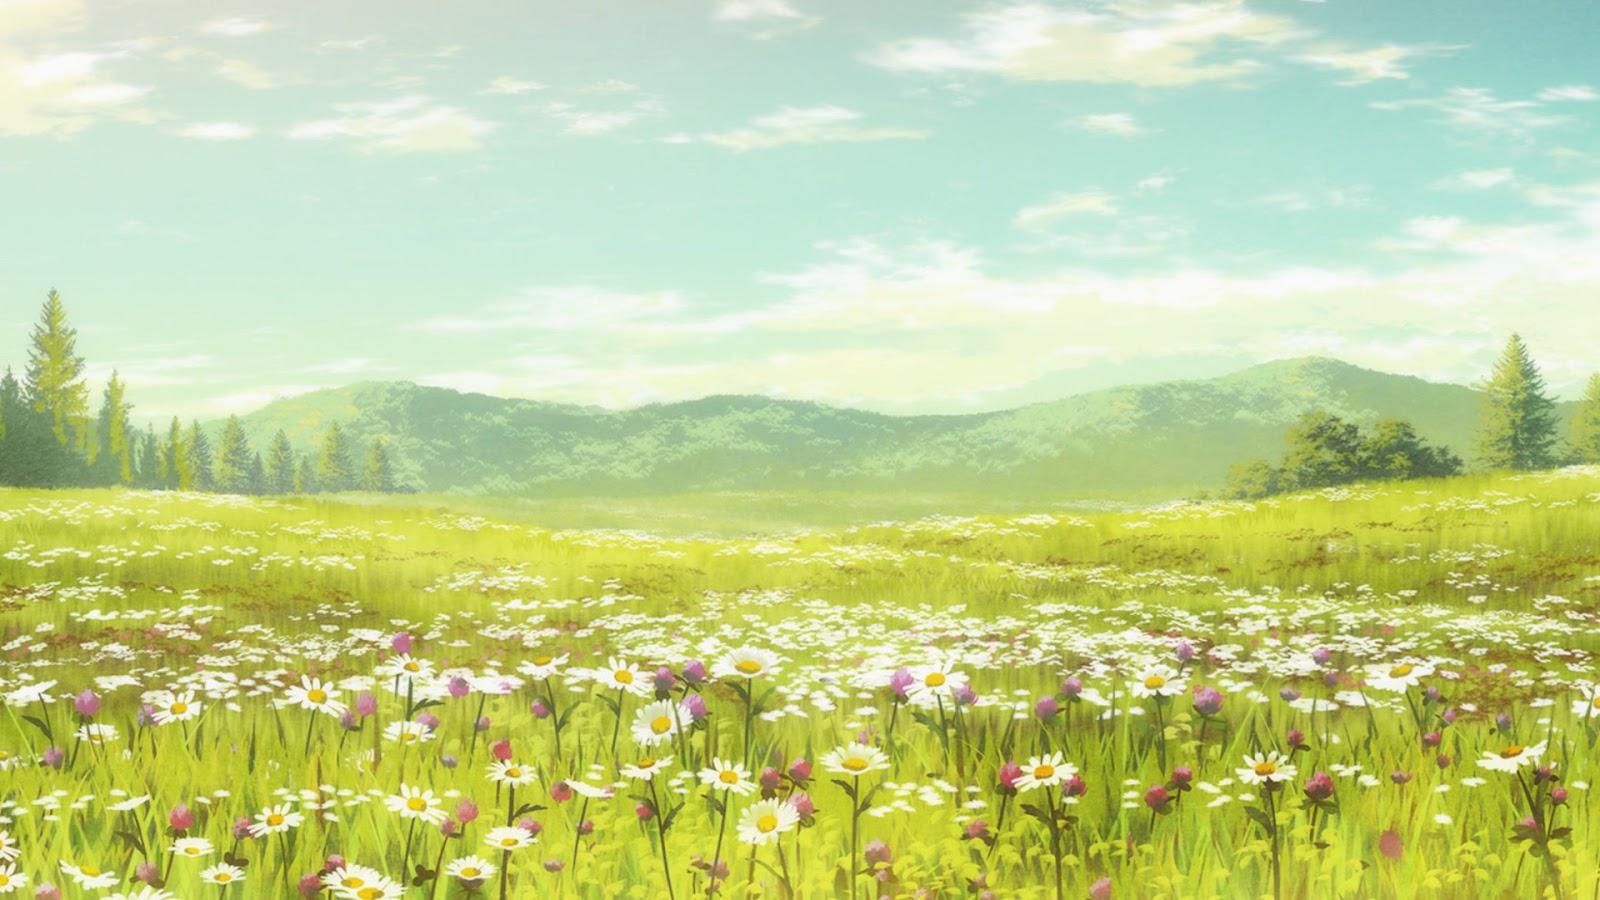 Anime Flower Field Wallpapers - Top Free Anime Flower Field Backgrounds ...